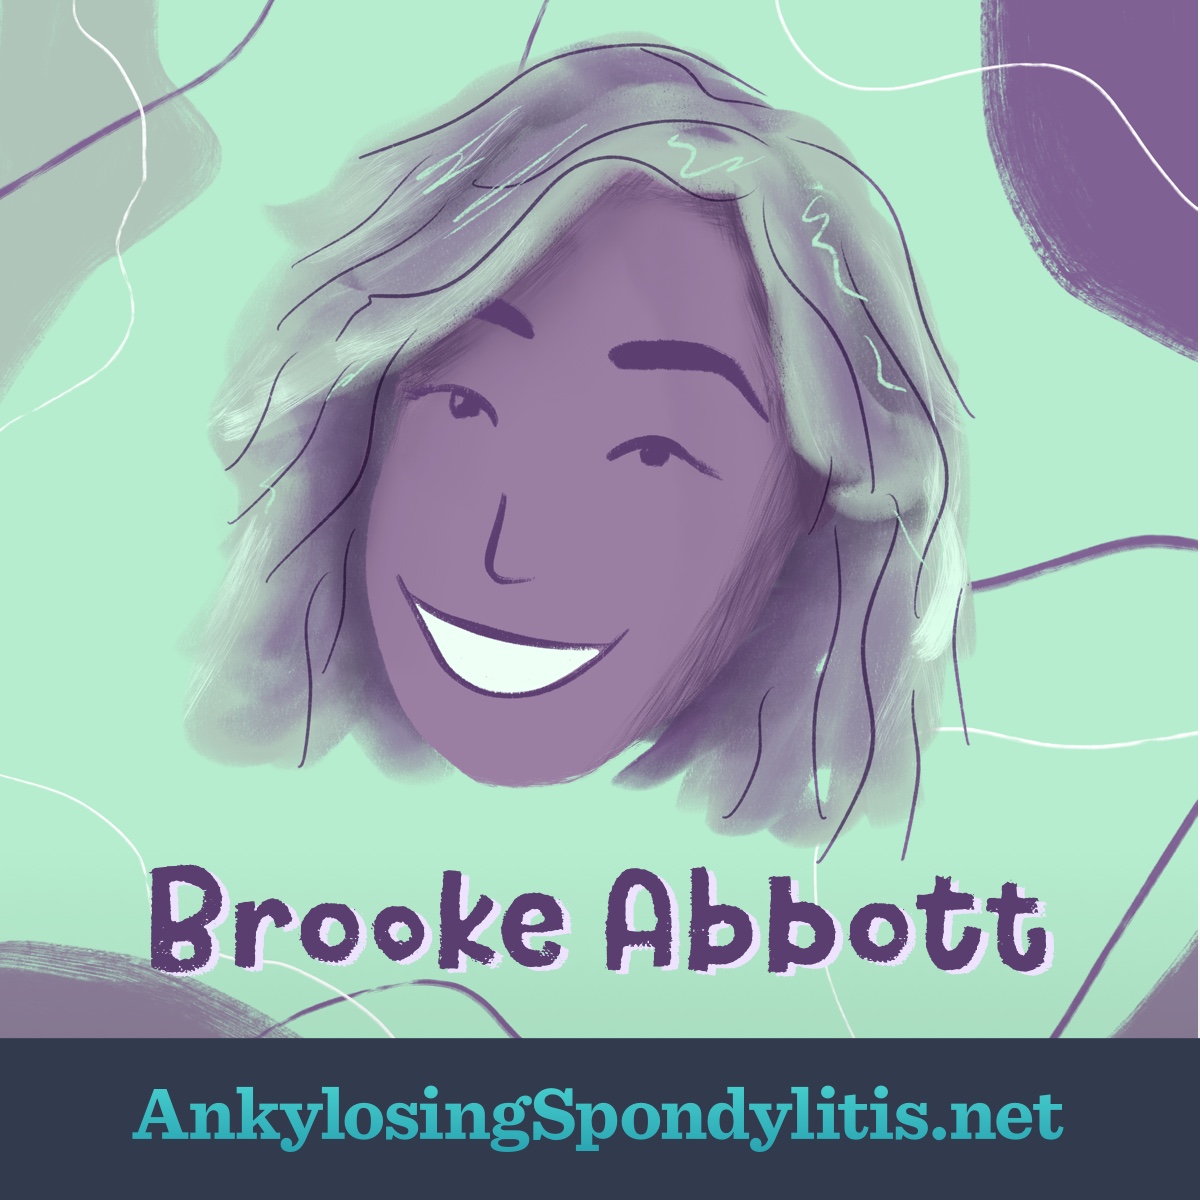 Ankylosing Spondylitis Community Advocate Brooke